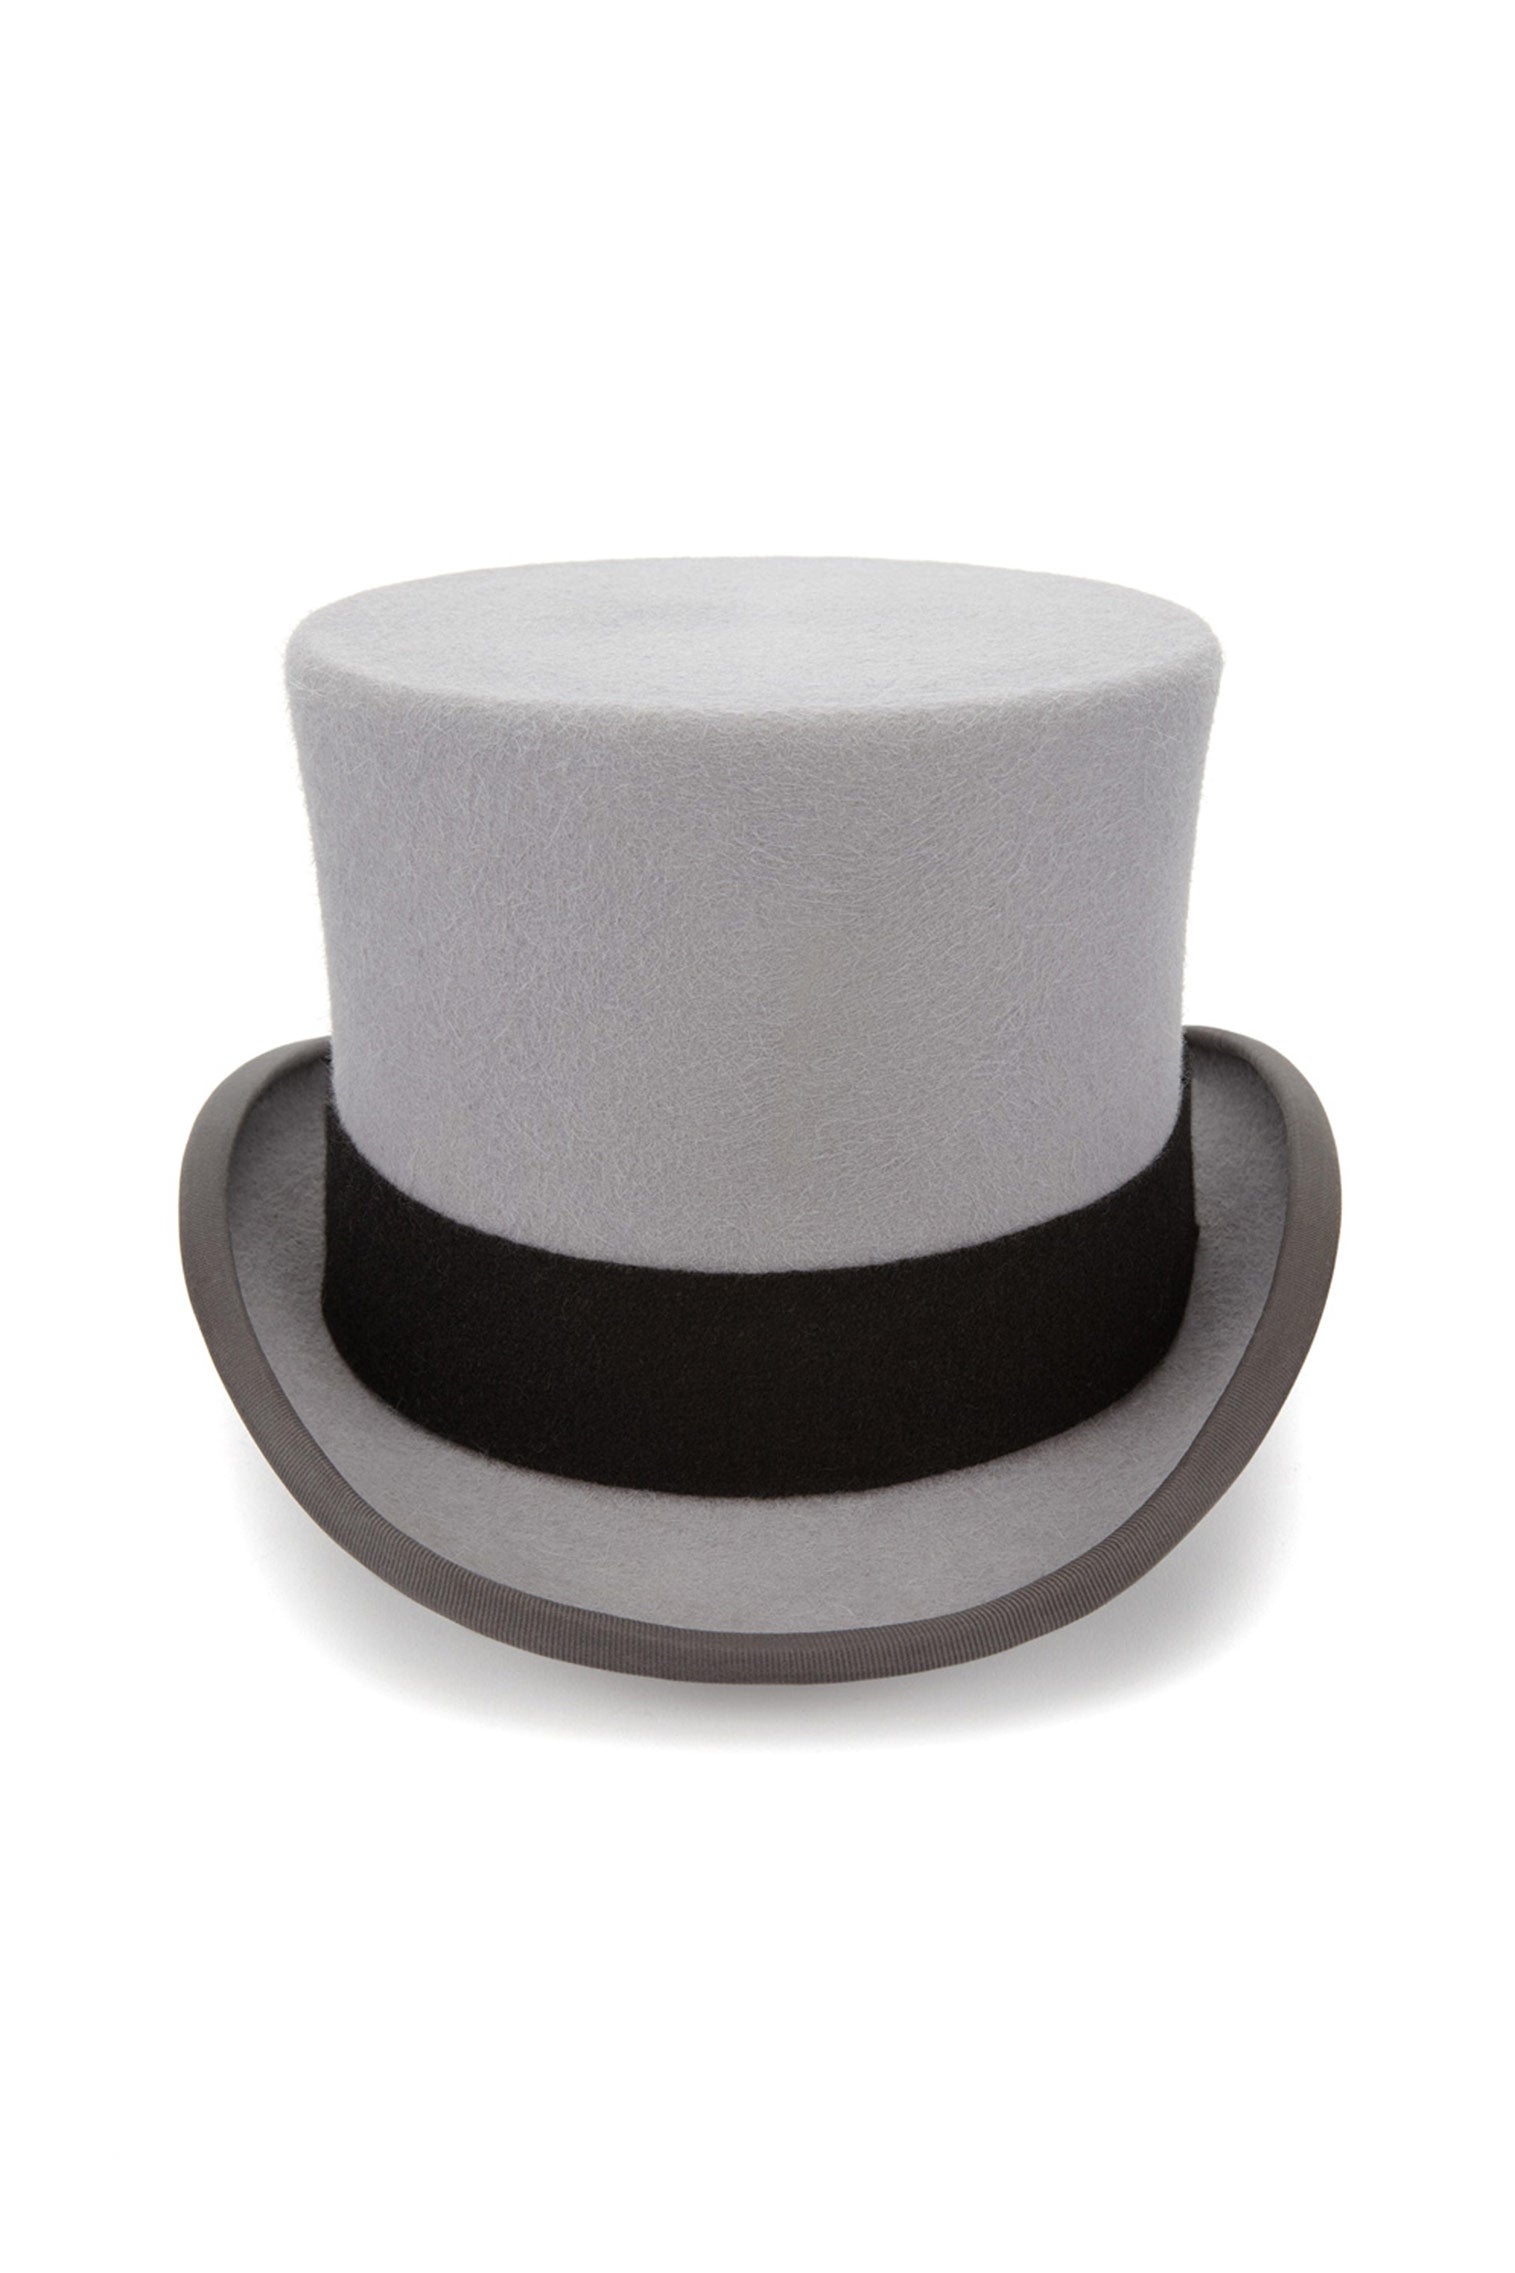 Ascot Top Hat - Royal Ascot Hats - Lock & Co. Hatters London UK